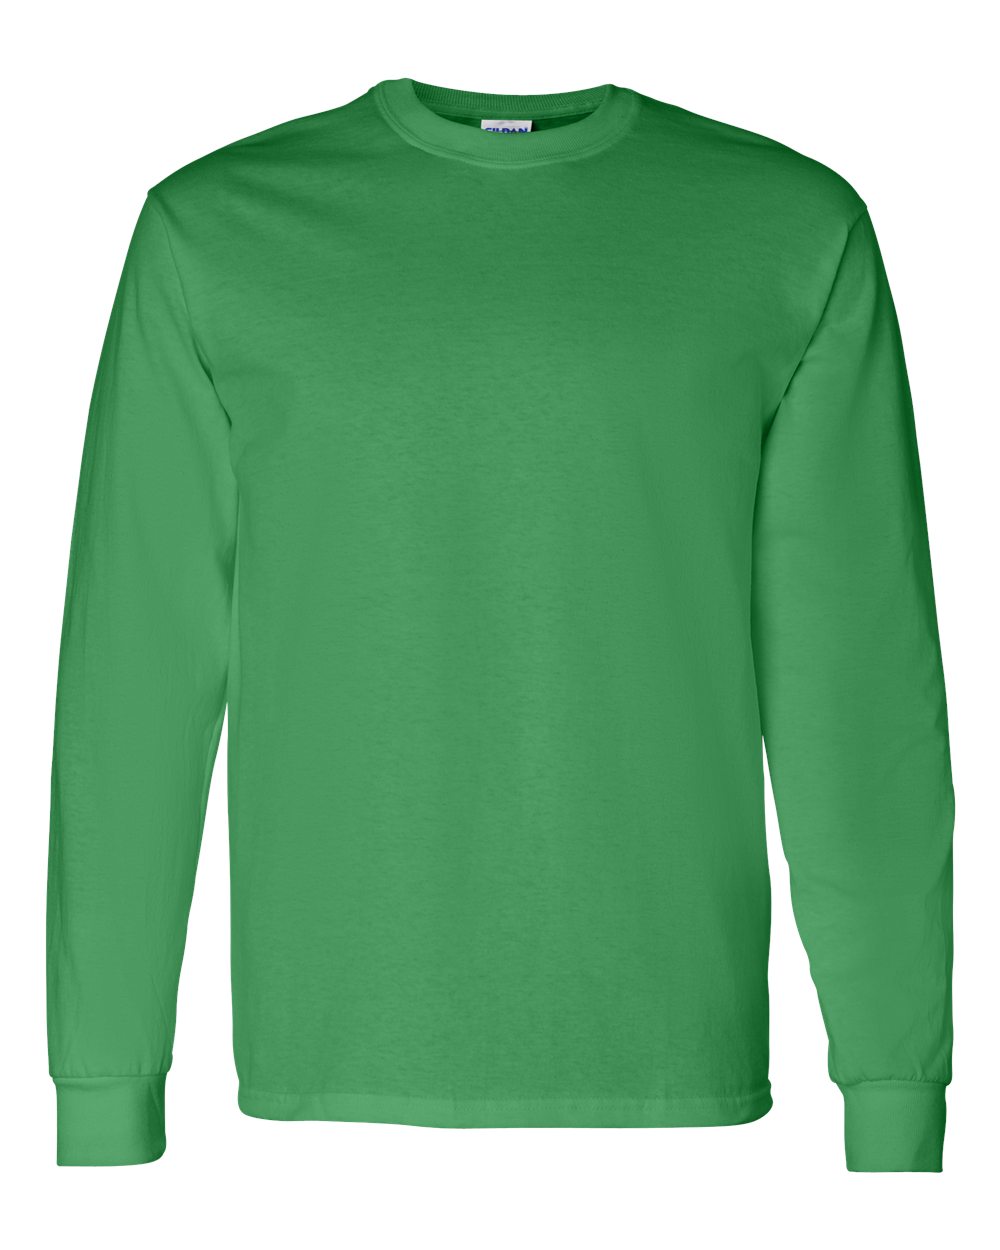 Pretreated Gildan 5400 Heavy Cotton Long Sleeve T-Shirt - Irish Green